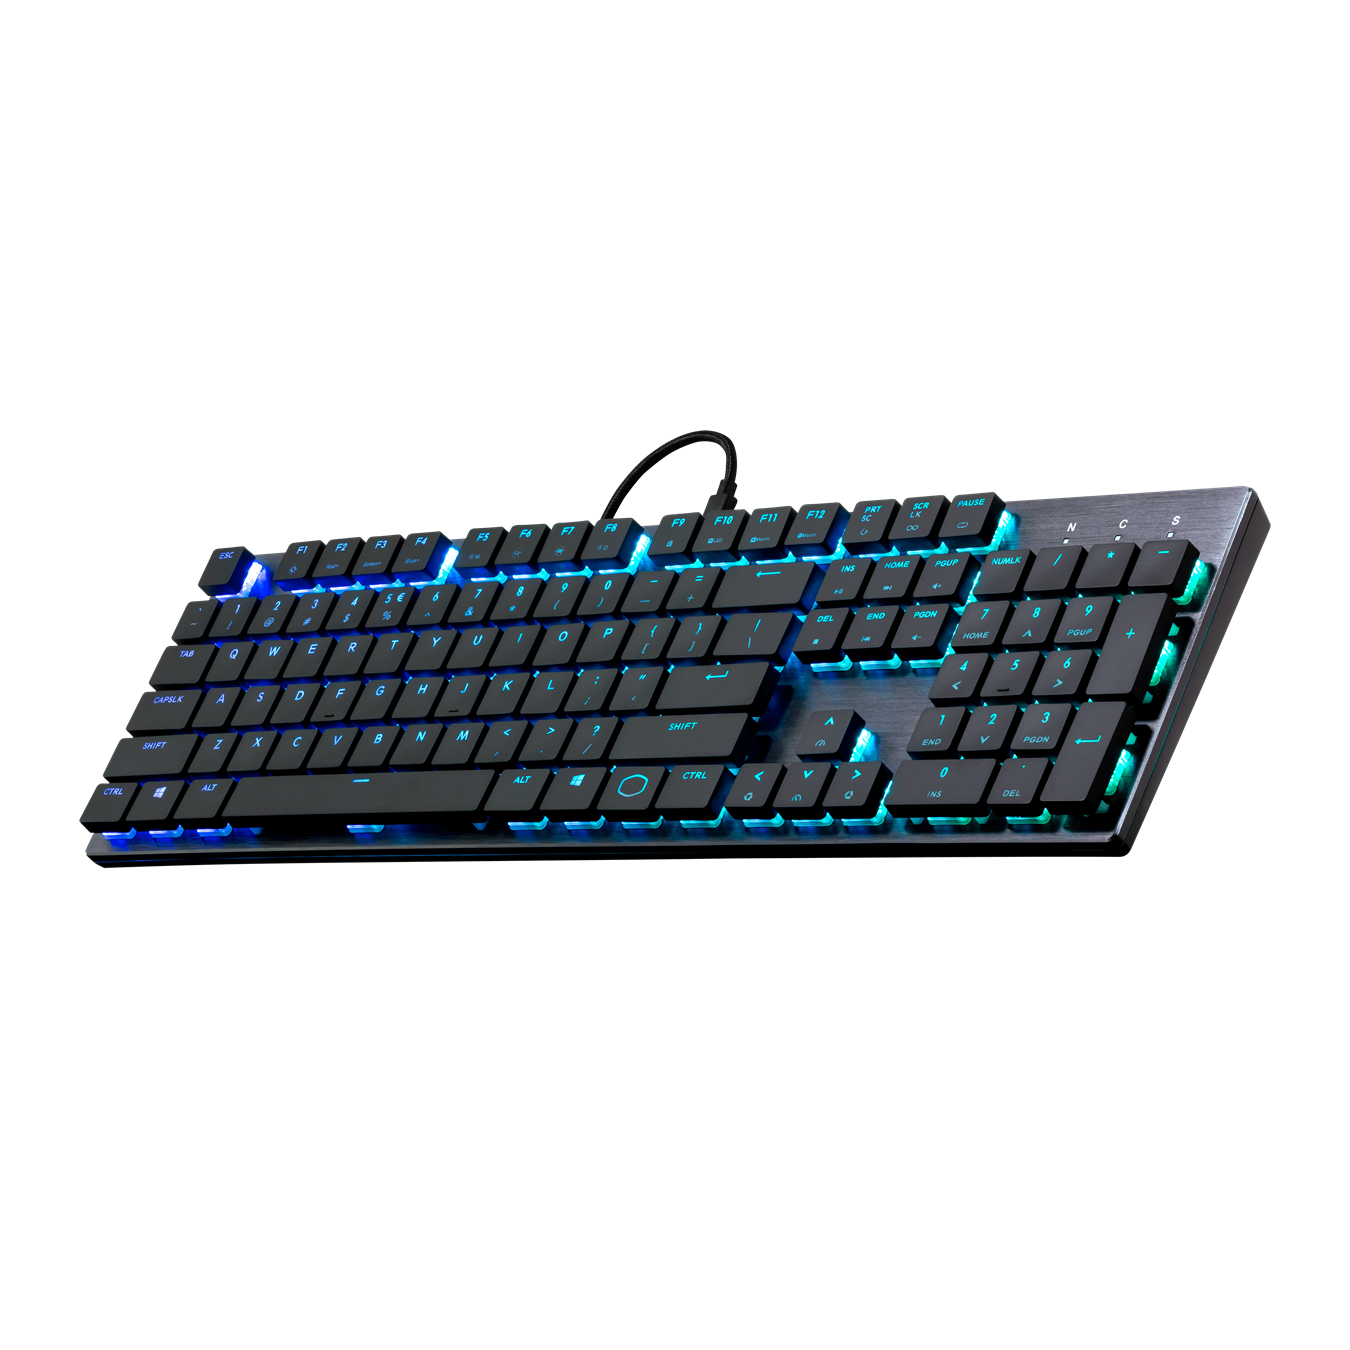 SK650 Low Profile RGB Mechanical Gaming Keyboard - Brushed Aluminum Design